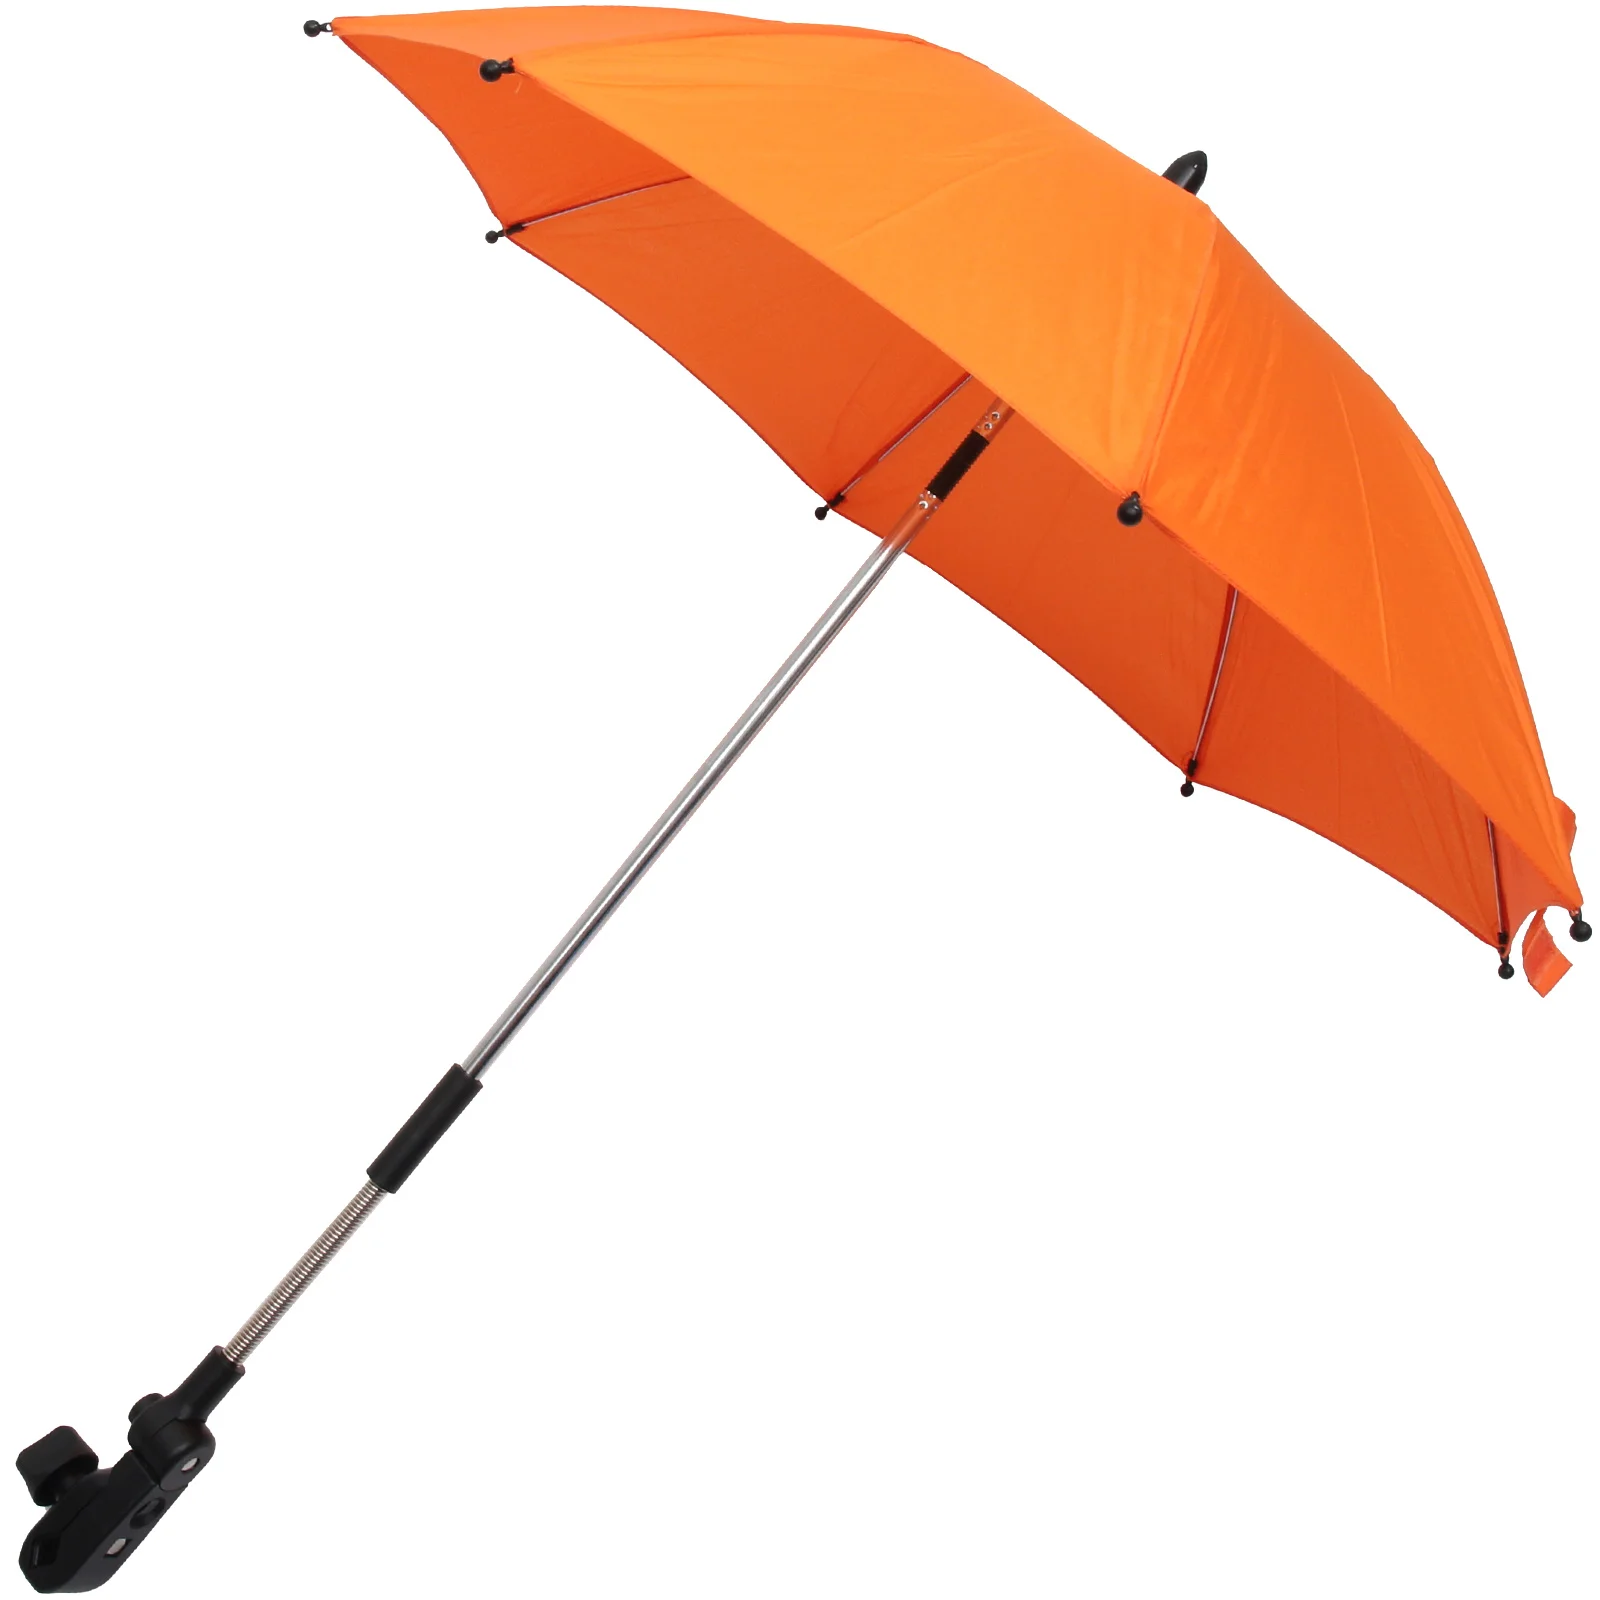 

Adjustable Umbrella and Holder UV Protection Parasol Rain Sun Brolly for Baby Stroller Pram Pushchair Wheelchair